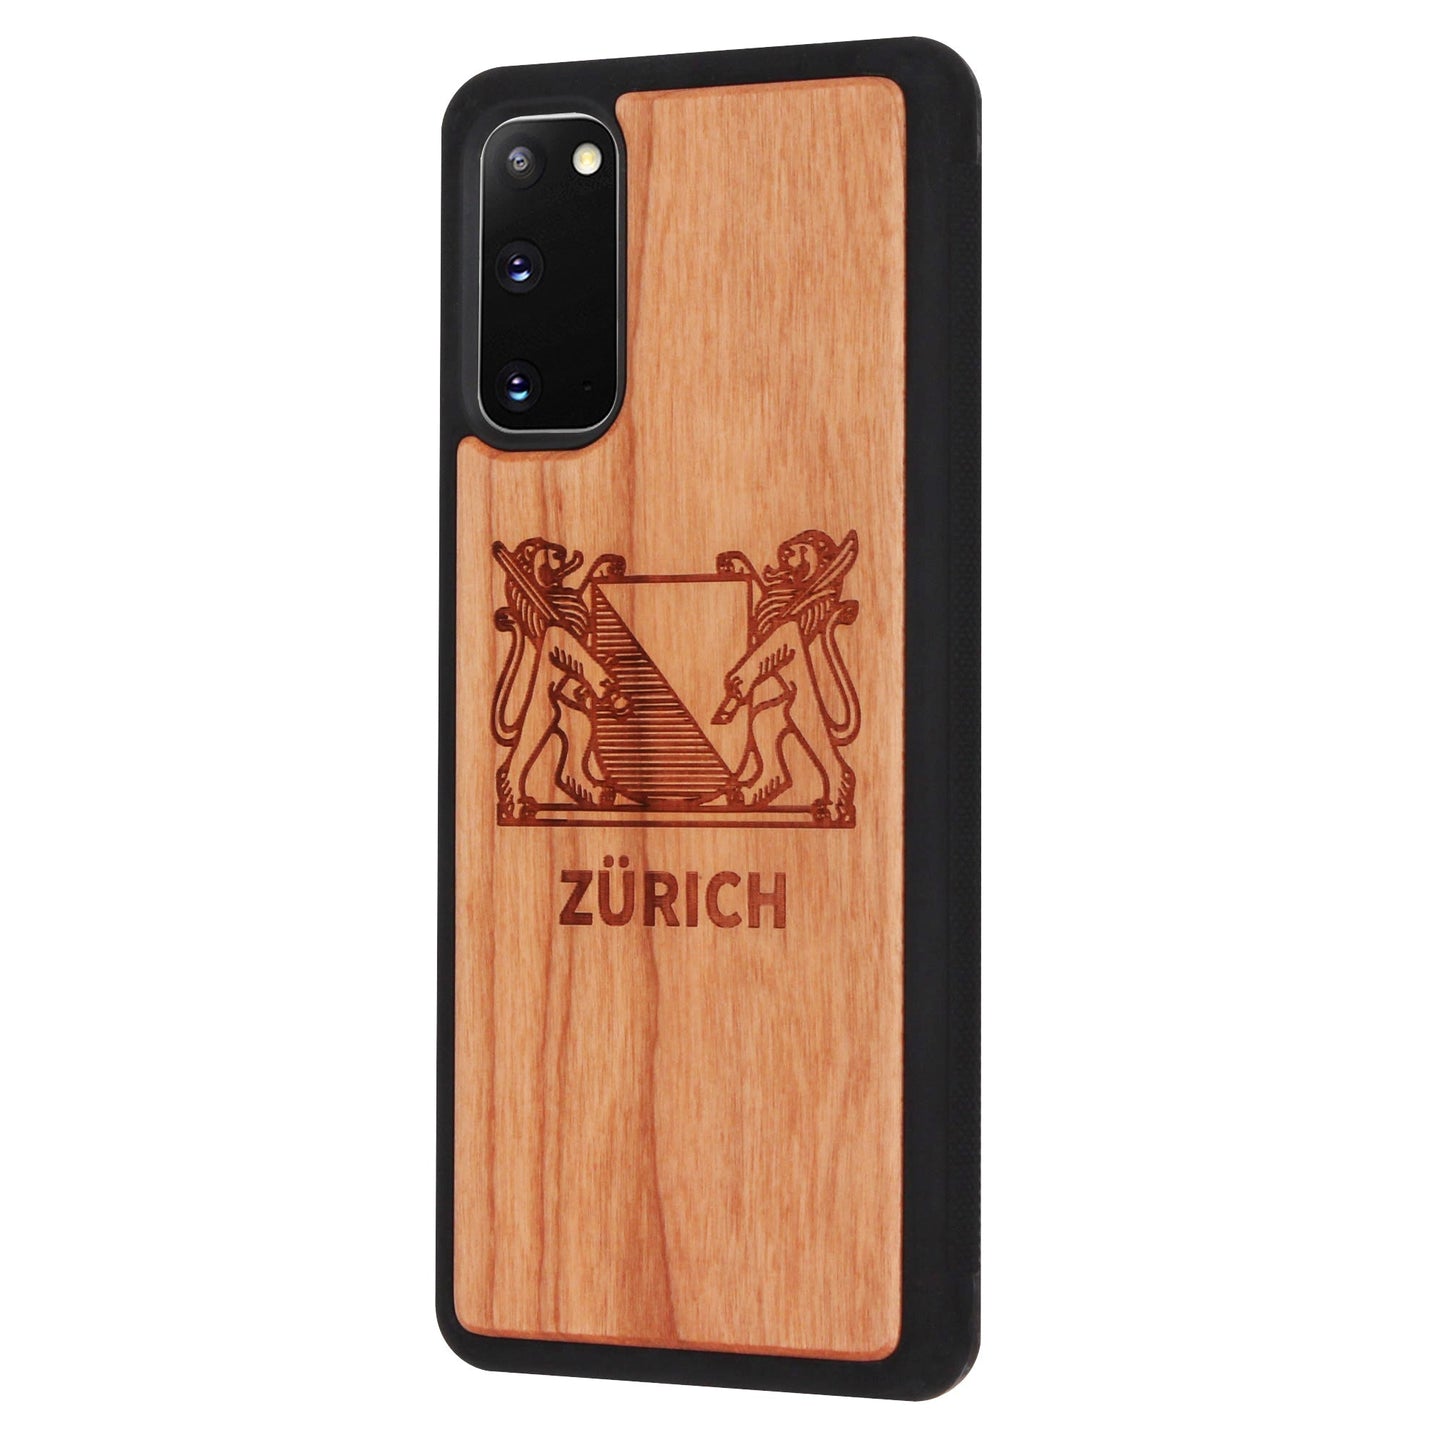 Coque Eden armoiries de Zurich en bois de cerisier pour Samsung Galaxy S20